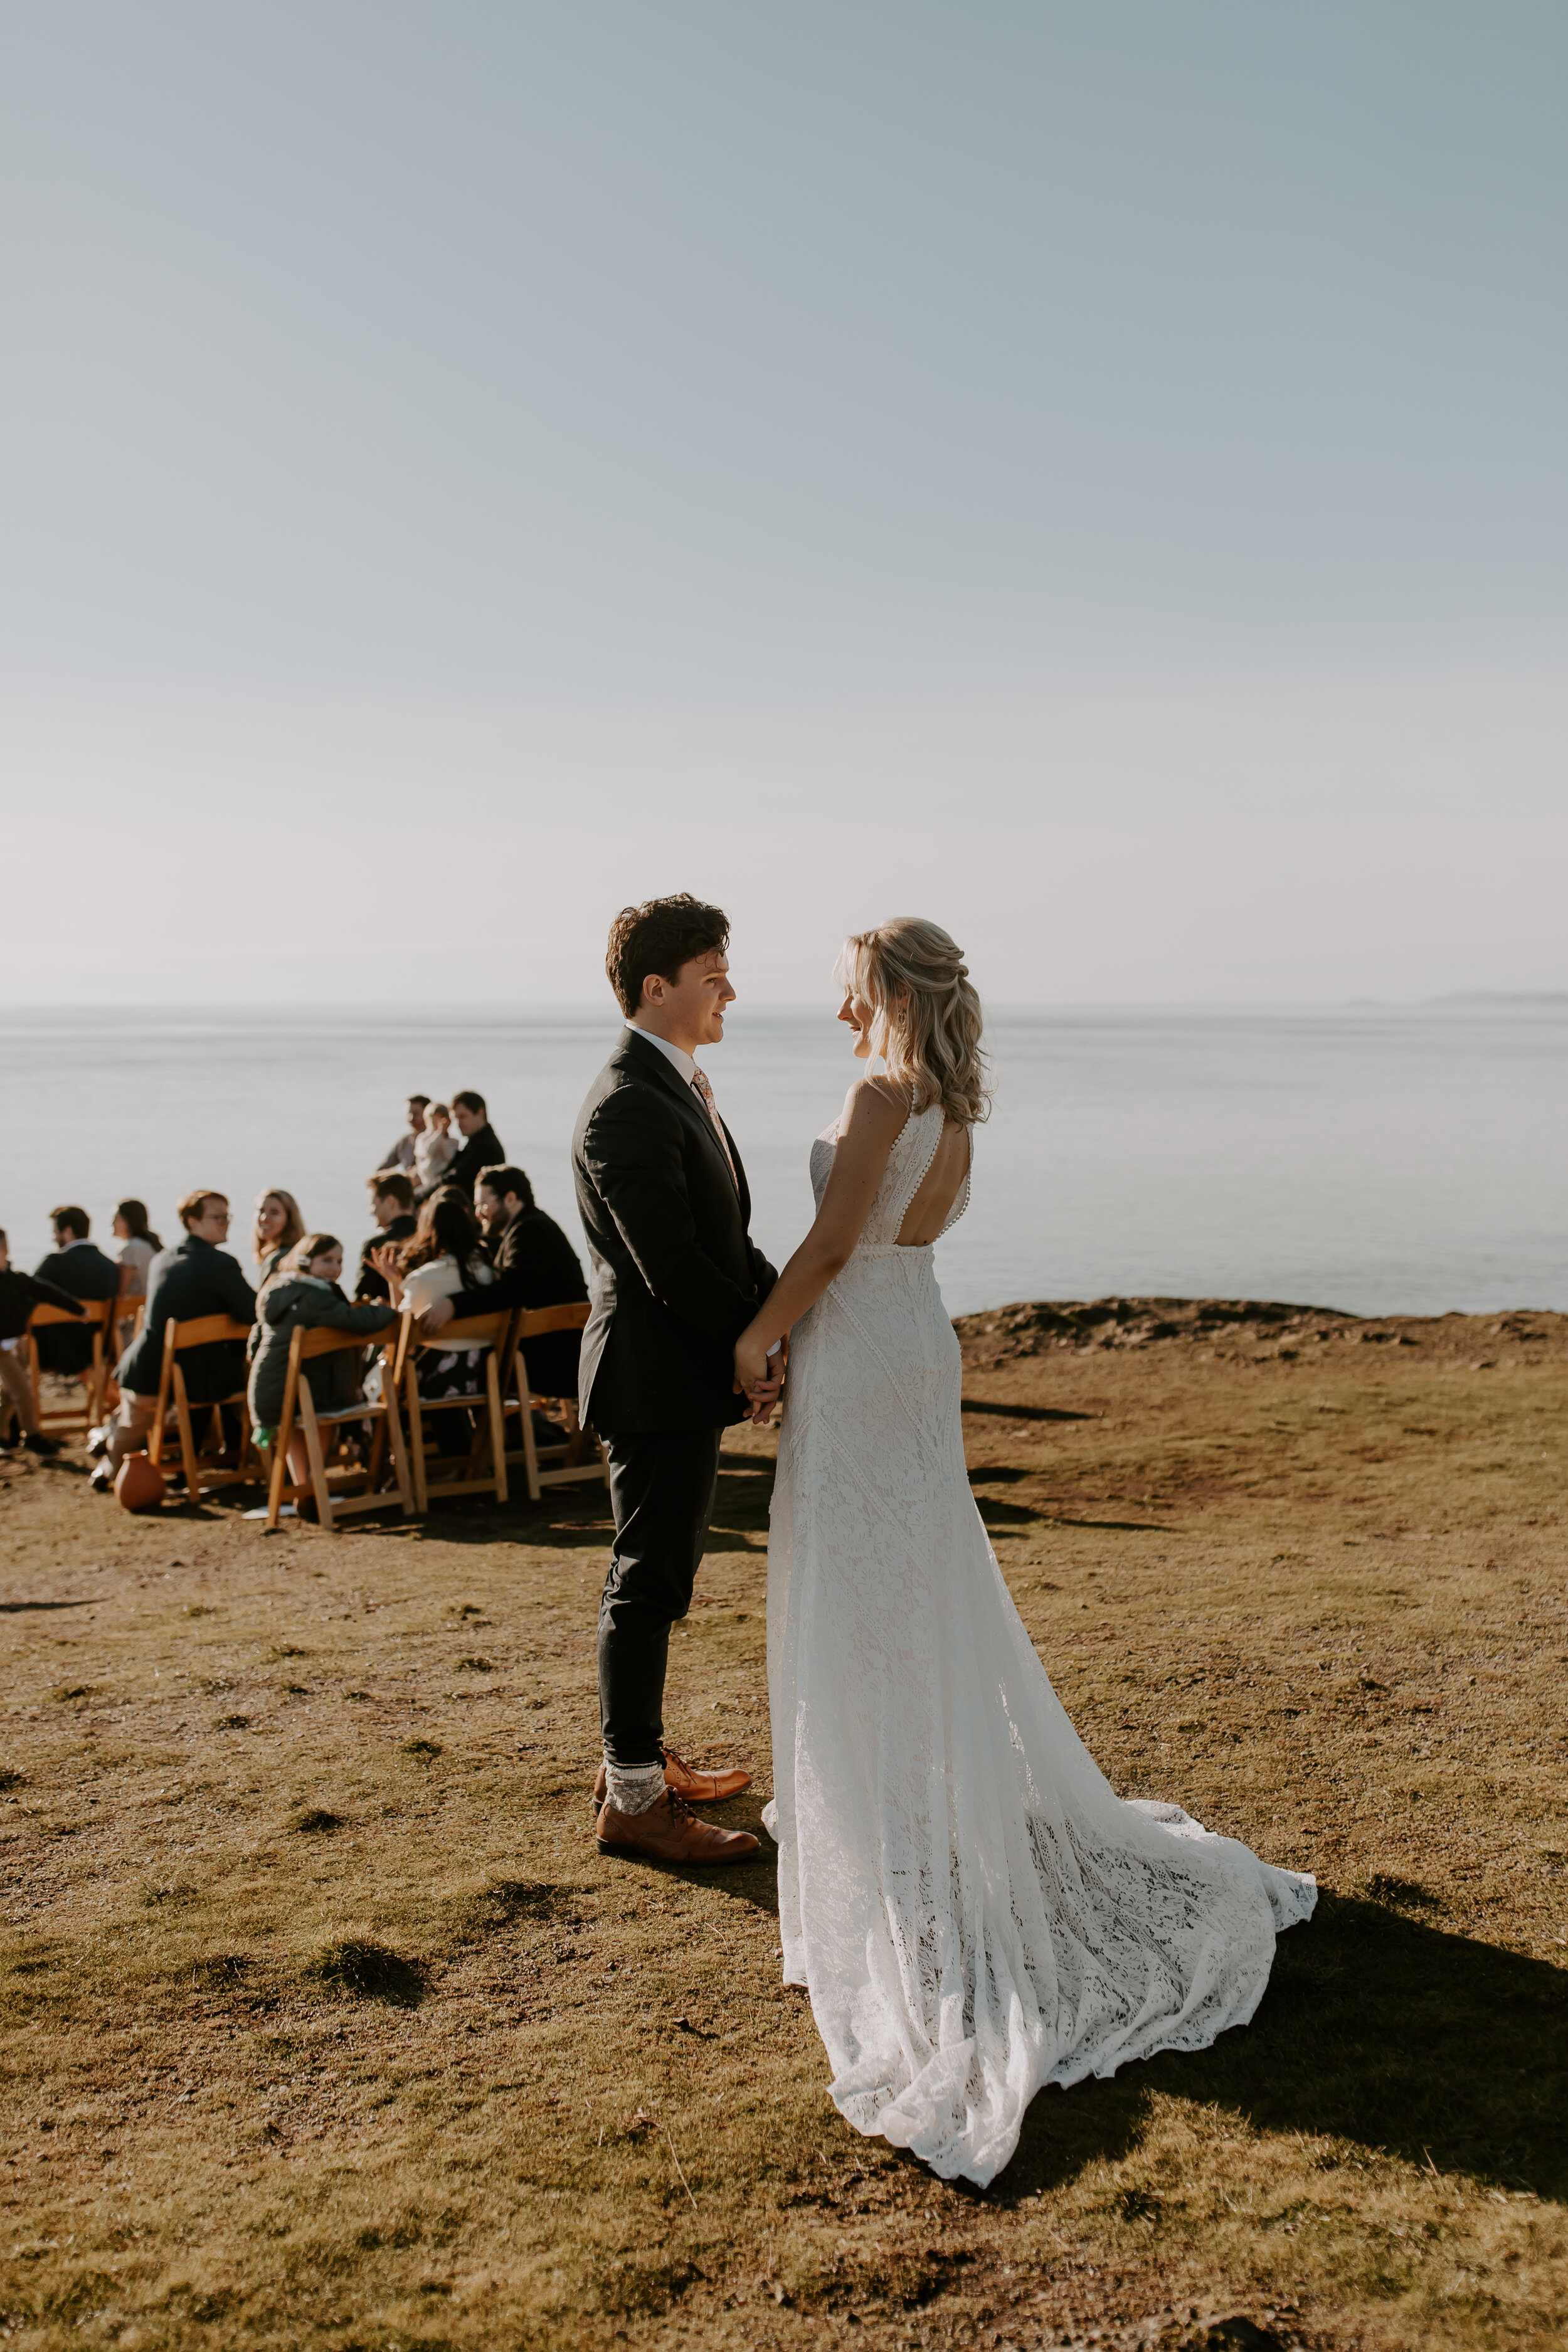  Georgie and Peyton’s Cannon Beach elopement in Rish Rio wedding dress 